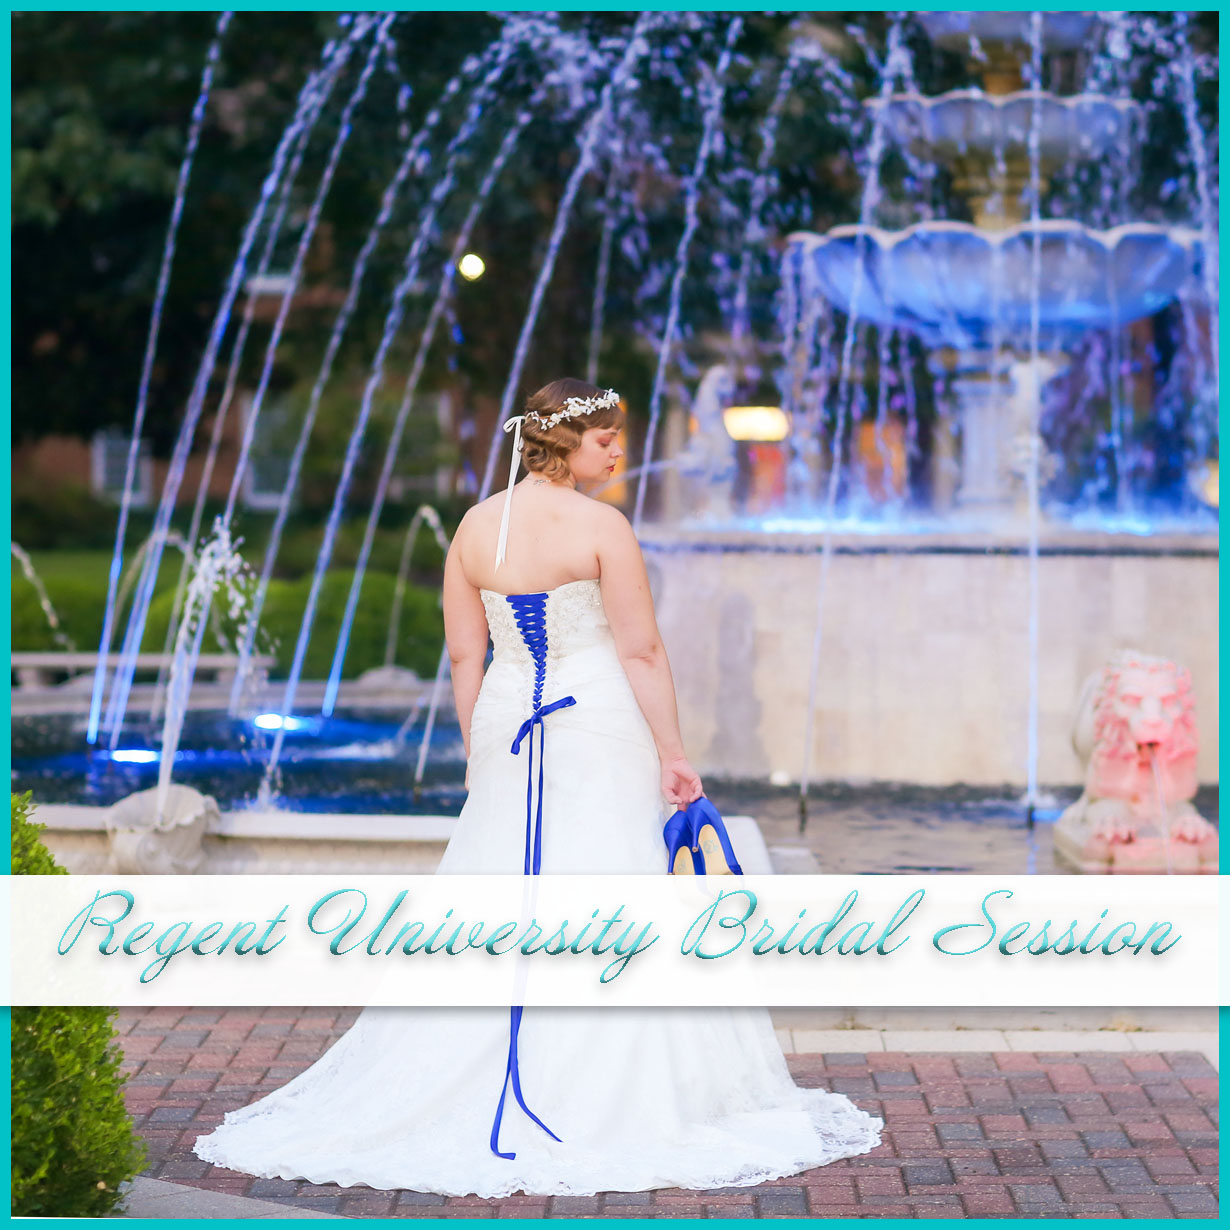 Regent University Bridal Session